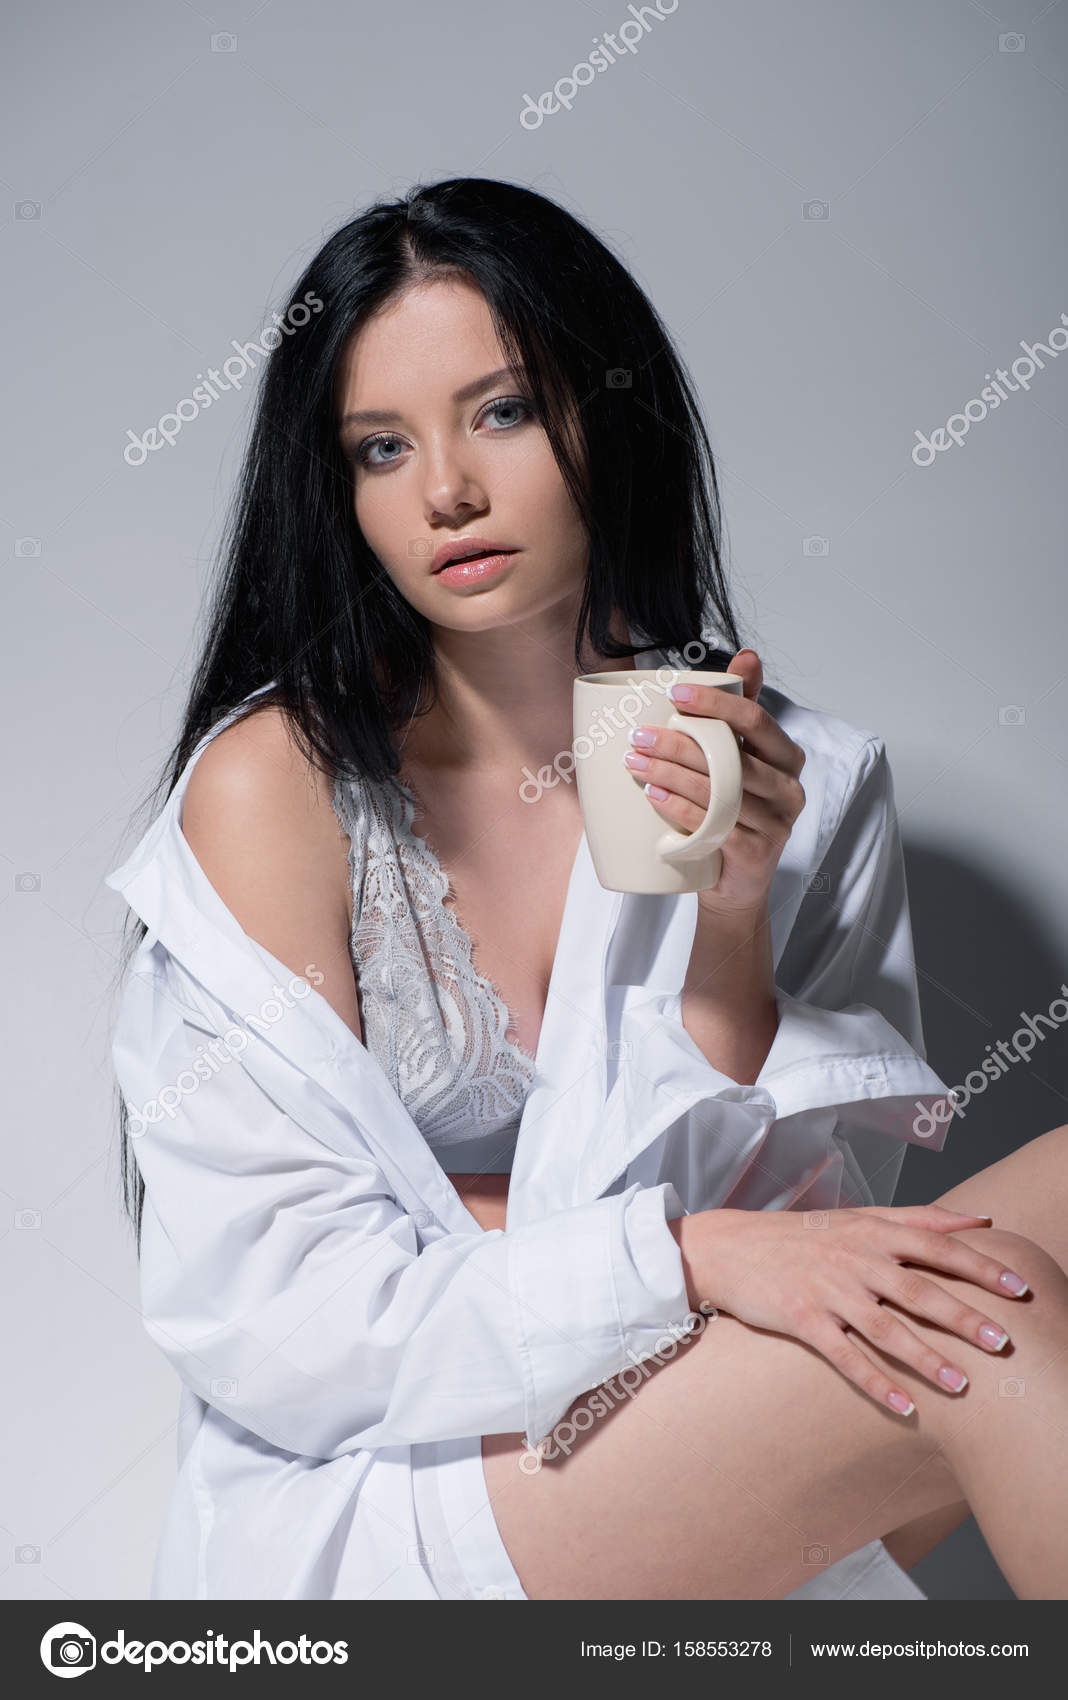 depositphotos_158553278-stock-photo-woman-drinking-coffee.jpg